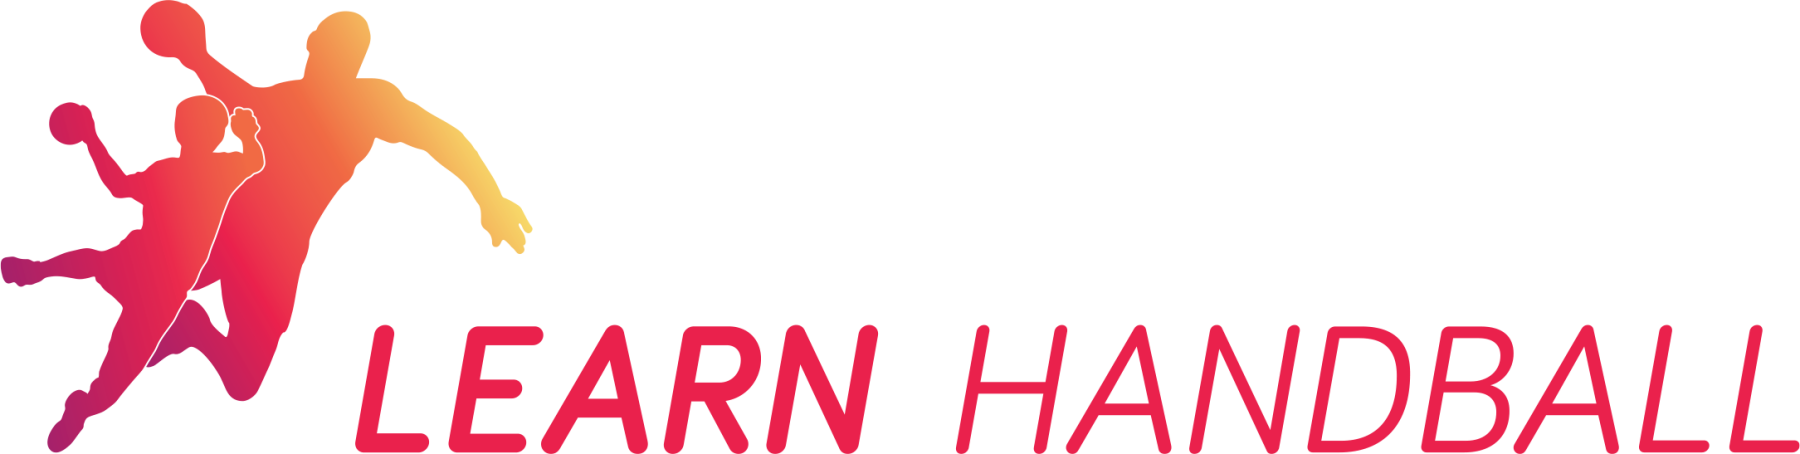 Learn-Handball-logo-Colour